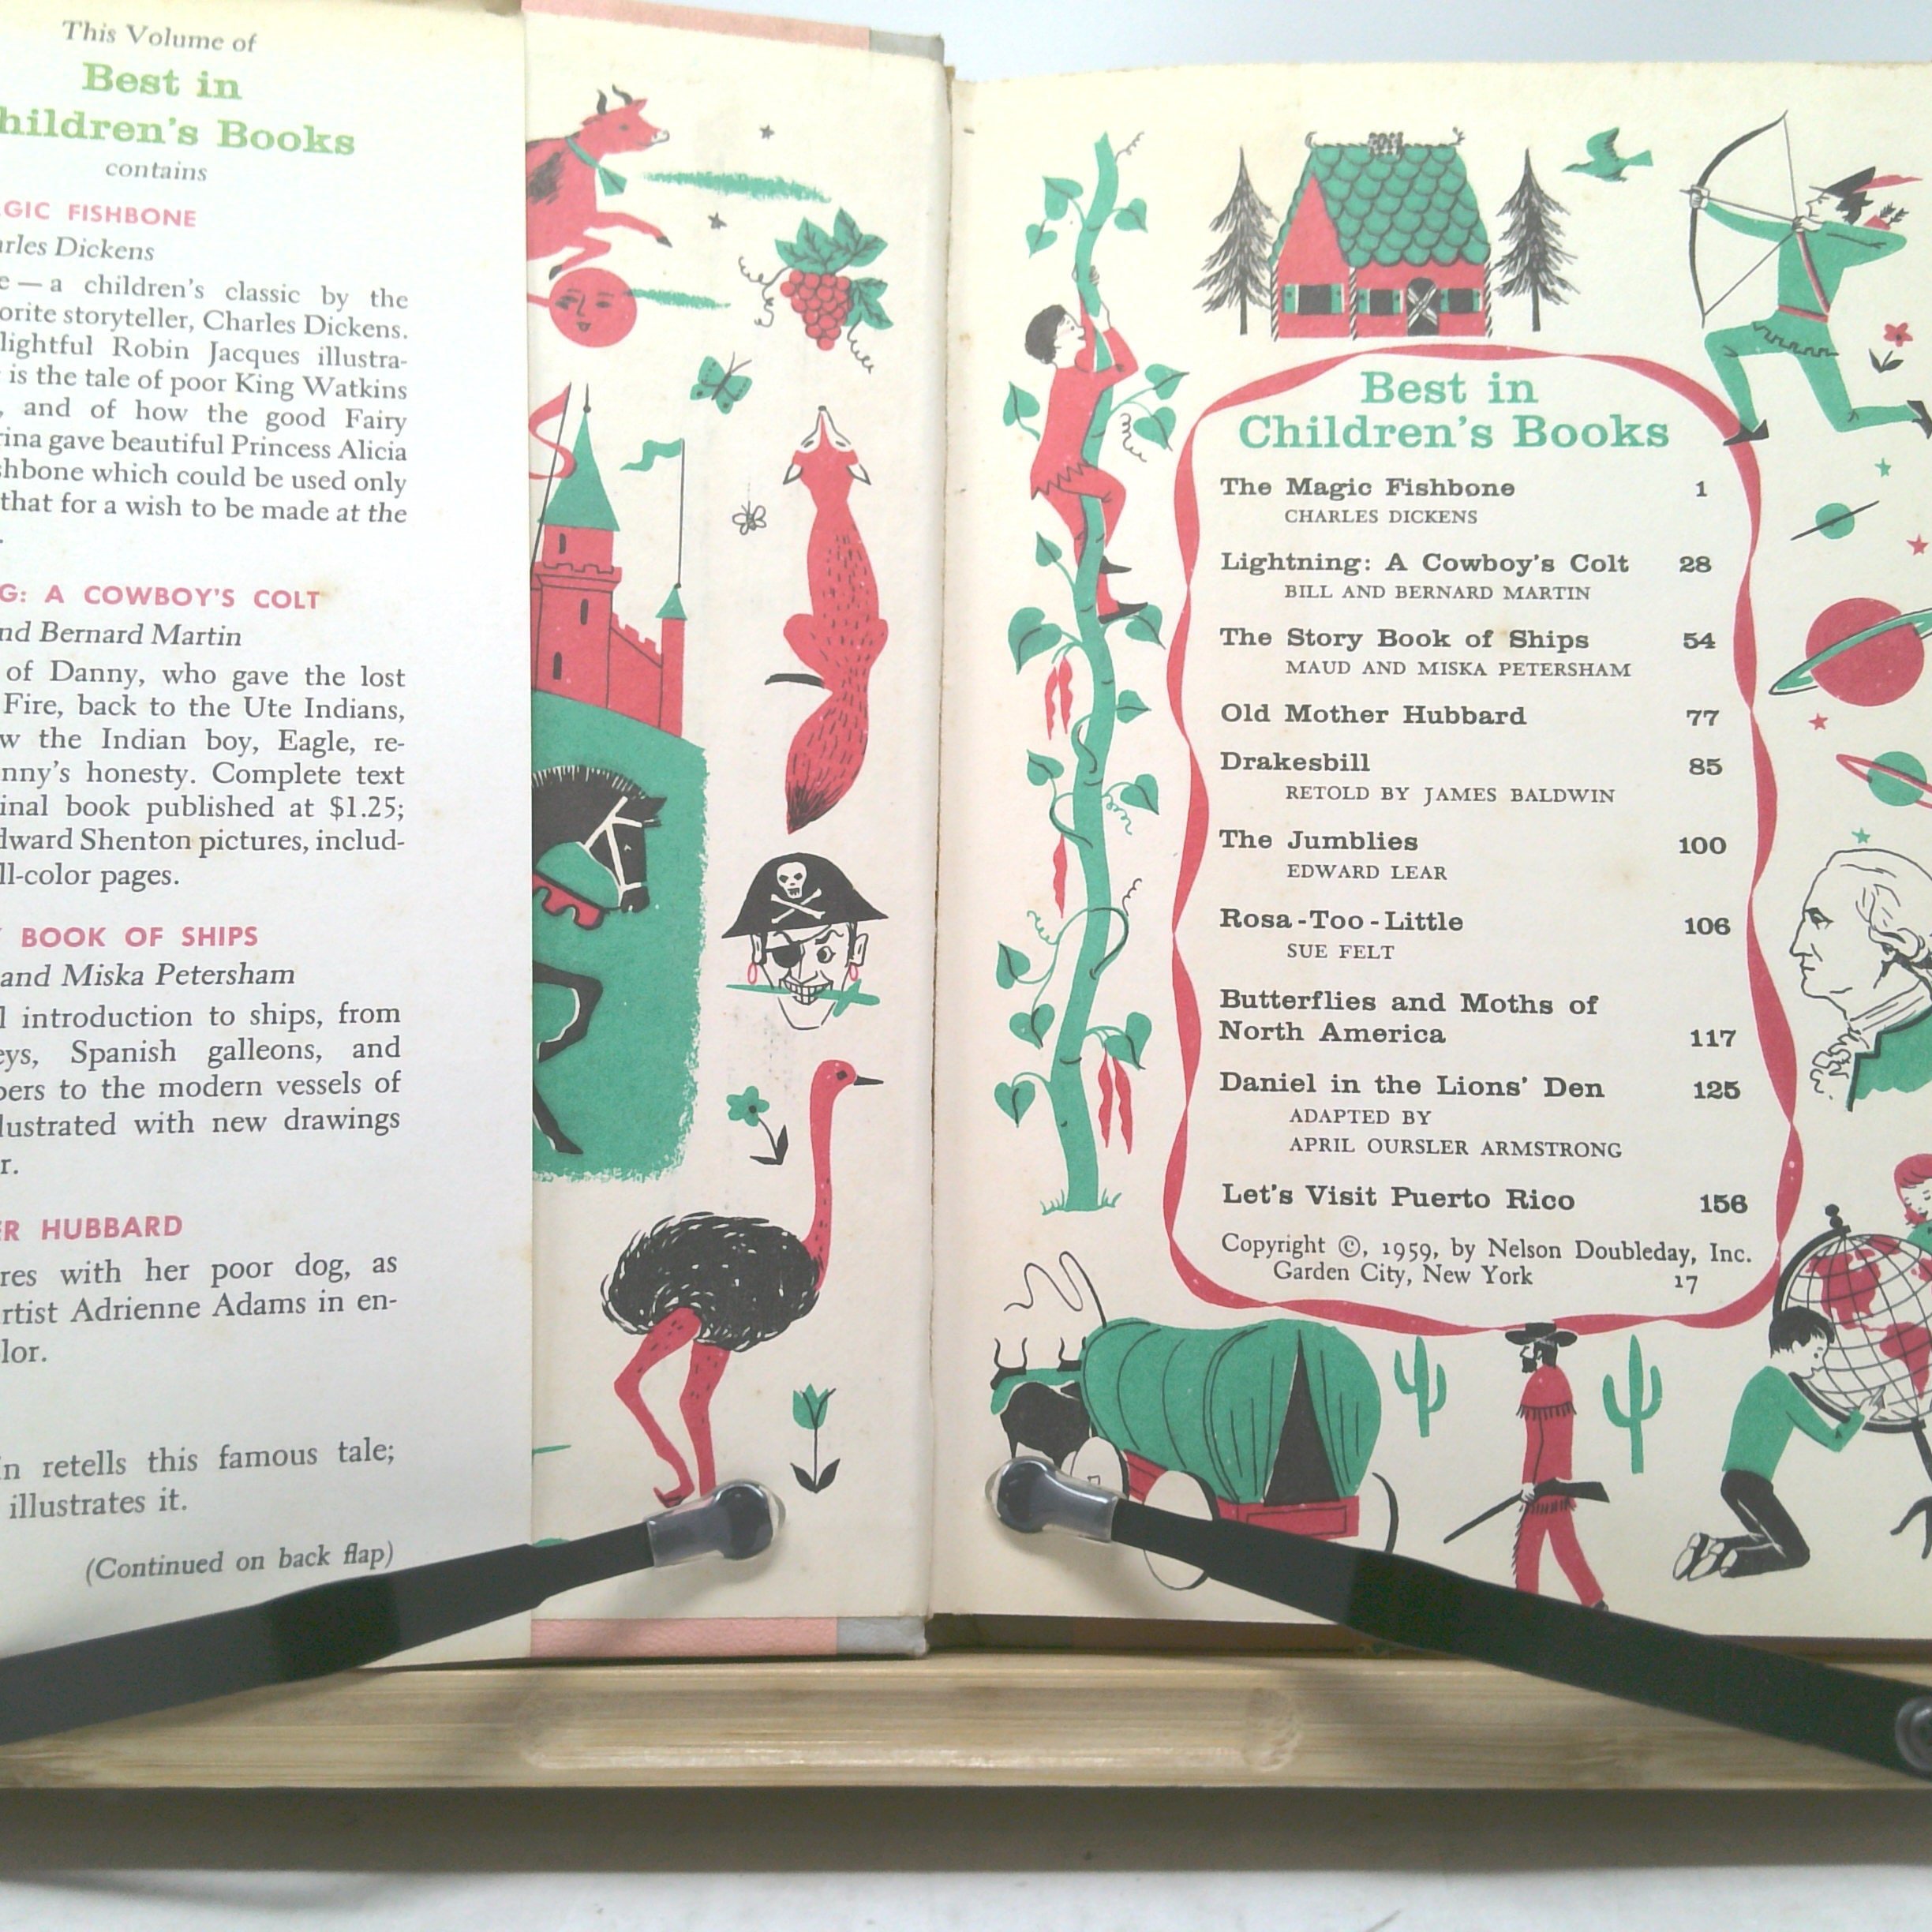 Vintage Book Set with Featured Title | Quiet Talks about Jesus | Decorative  Vintage Book Sets | Book Décor | 5 Book/Set — Clean Earth Books